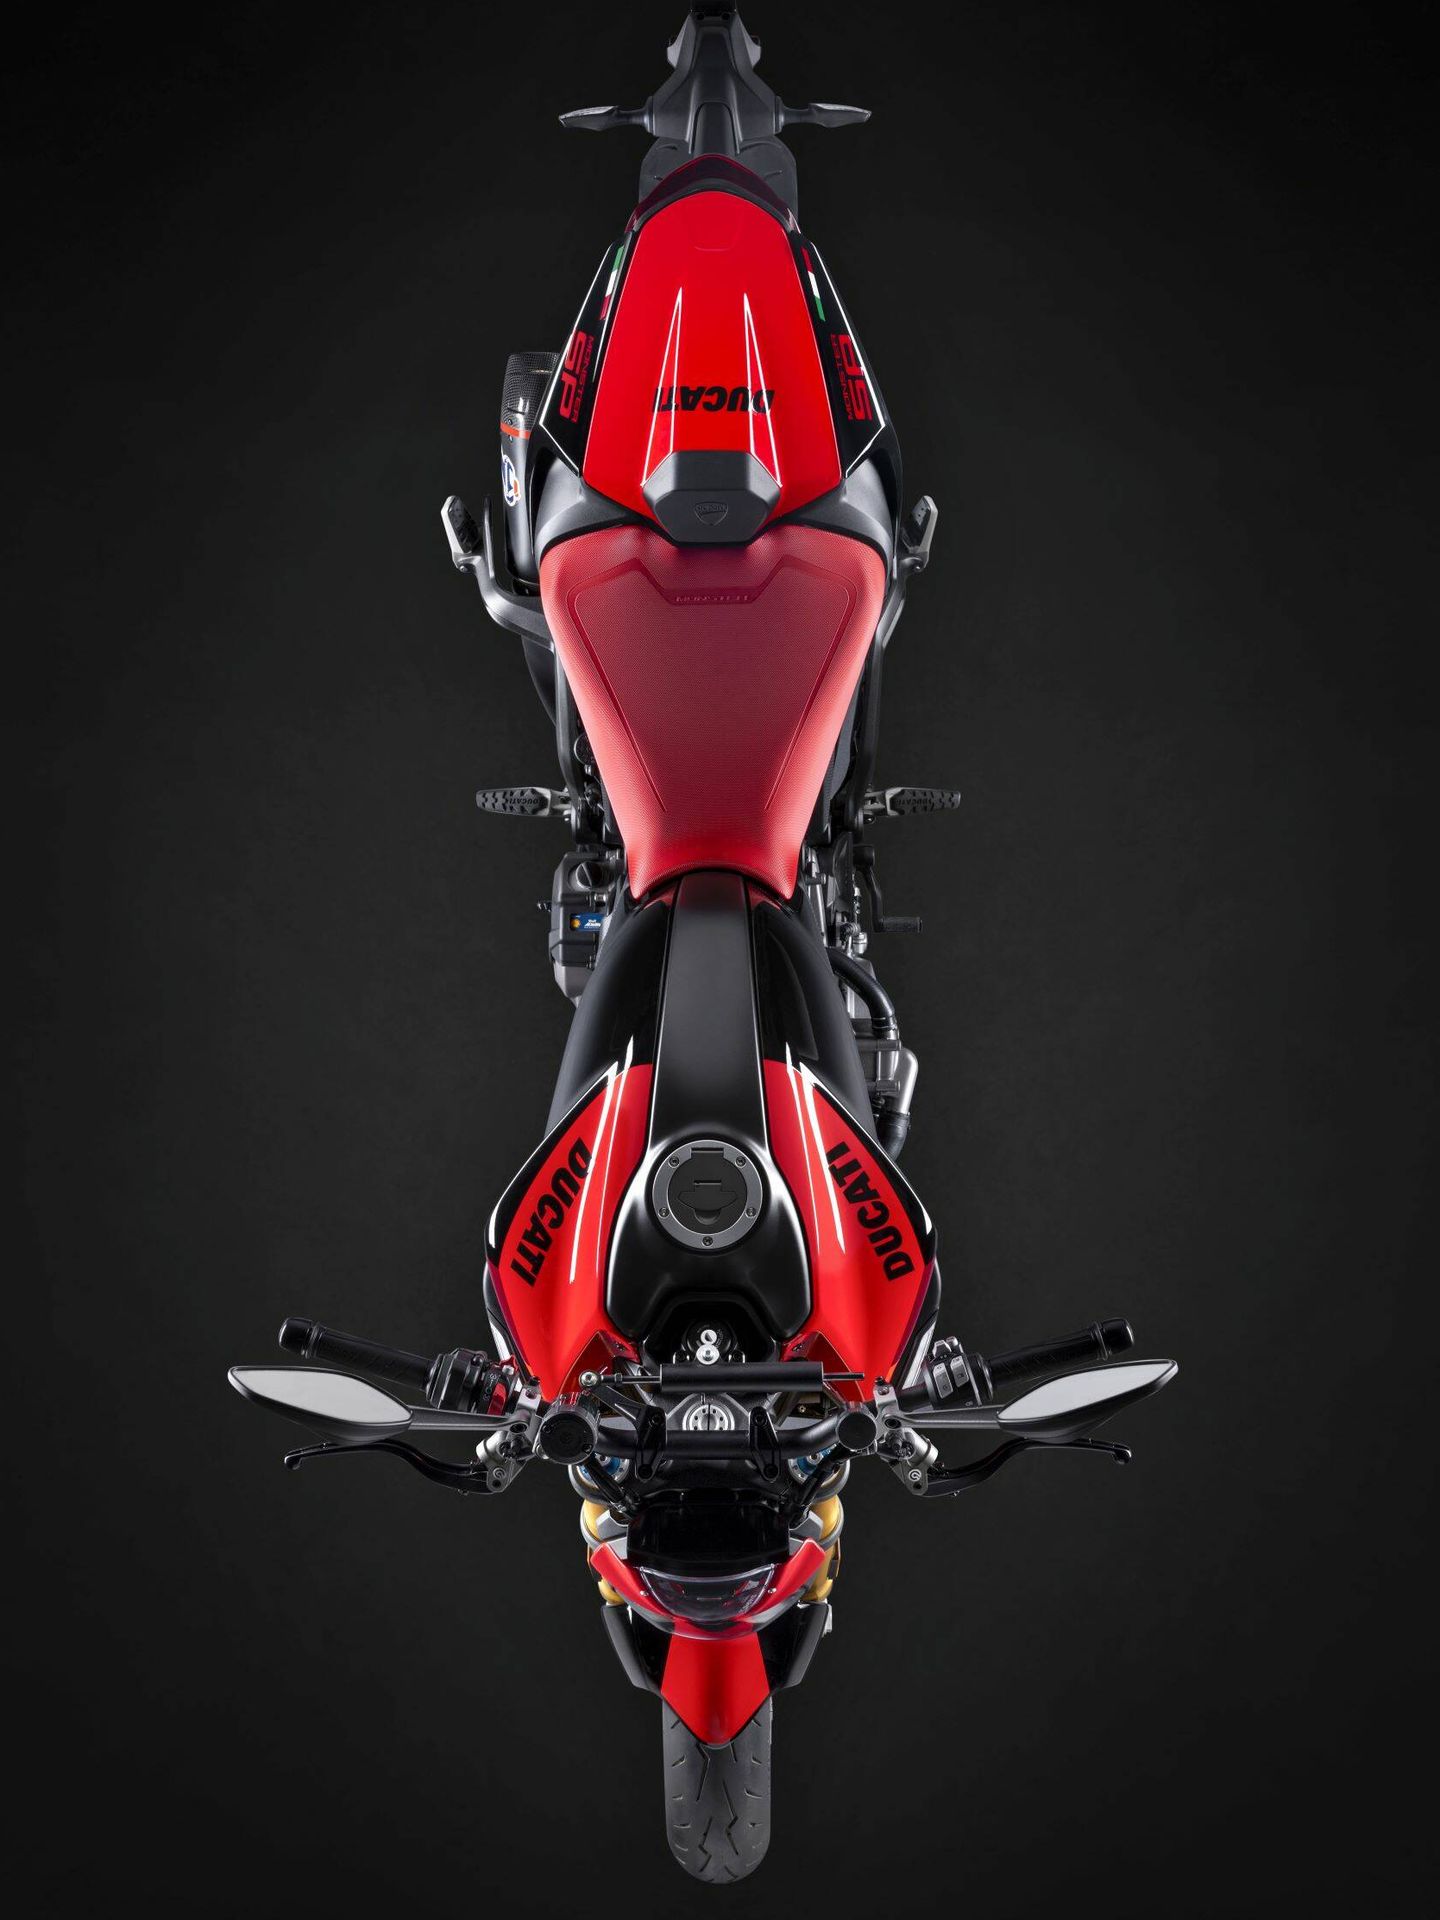 Vista cenital de la nueva Ducati Monster SP.